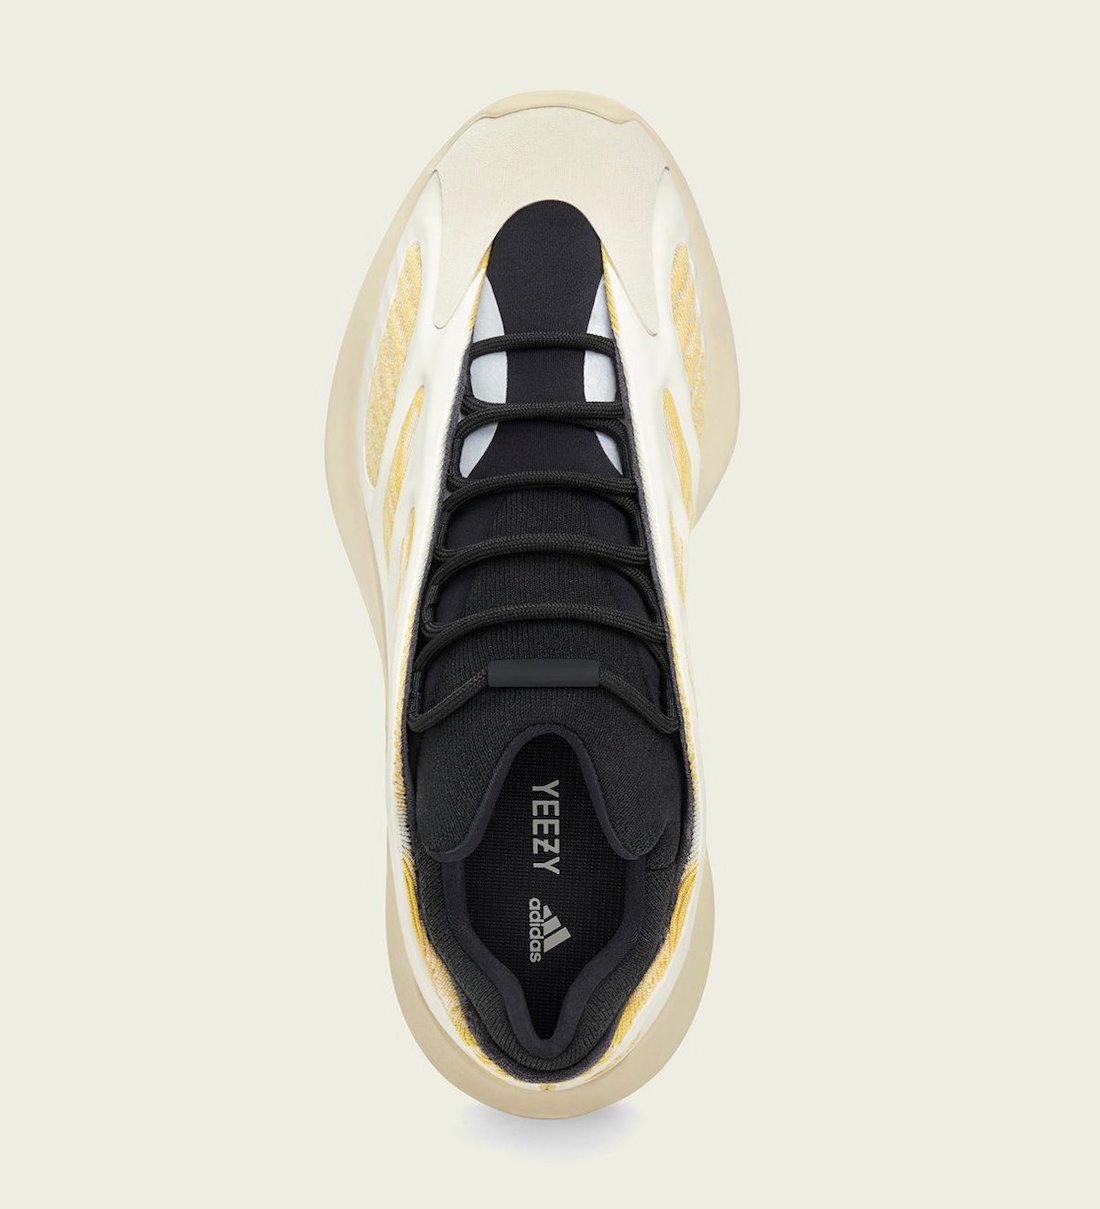 adidas yeezy 700 v3 safflower release info 2